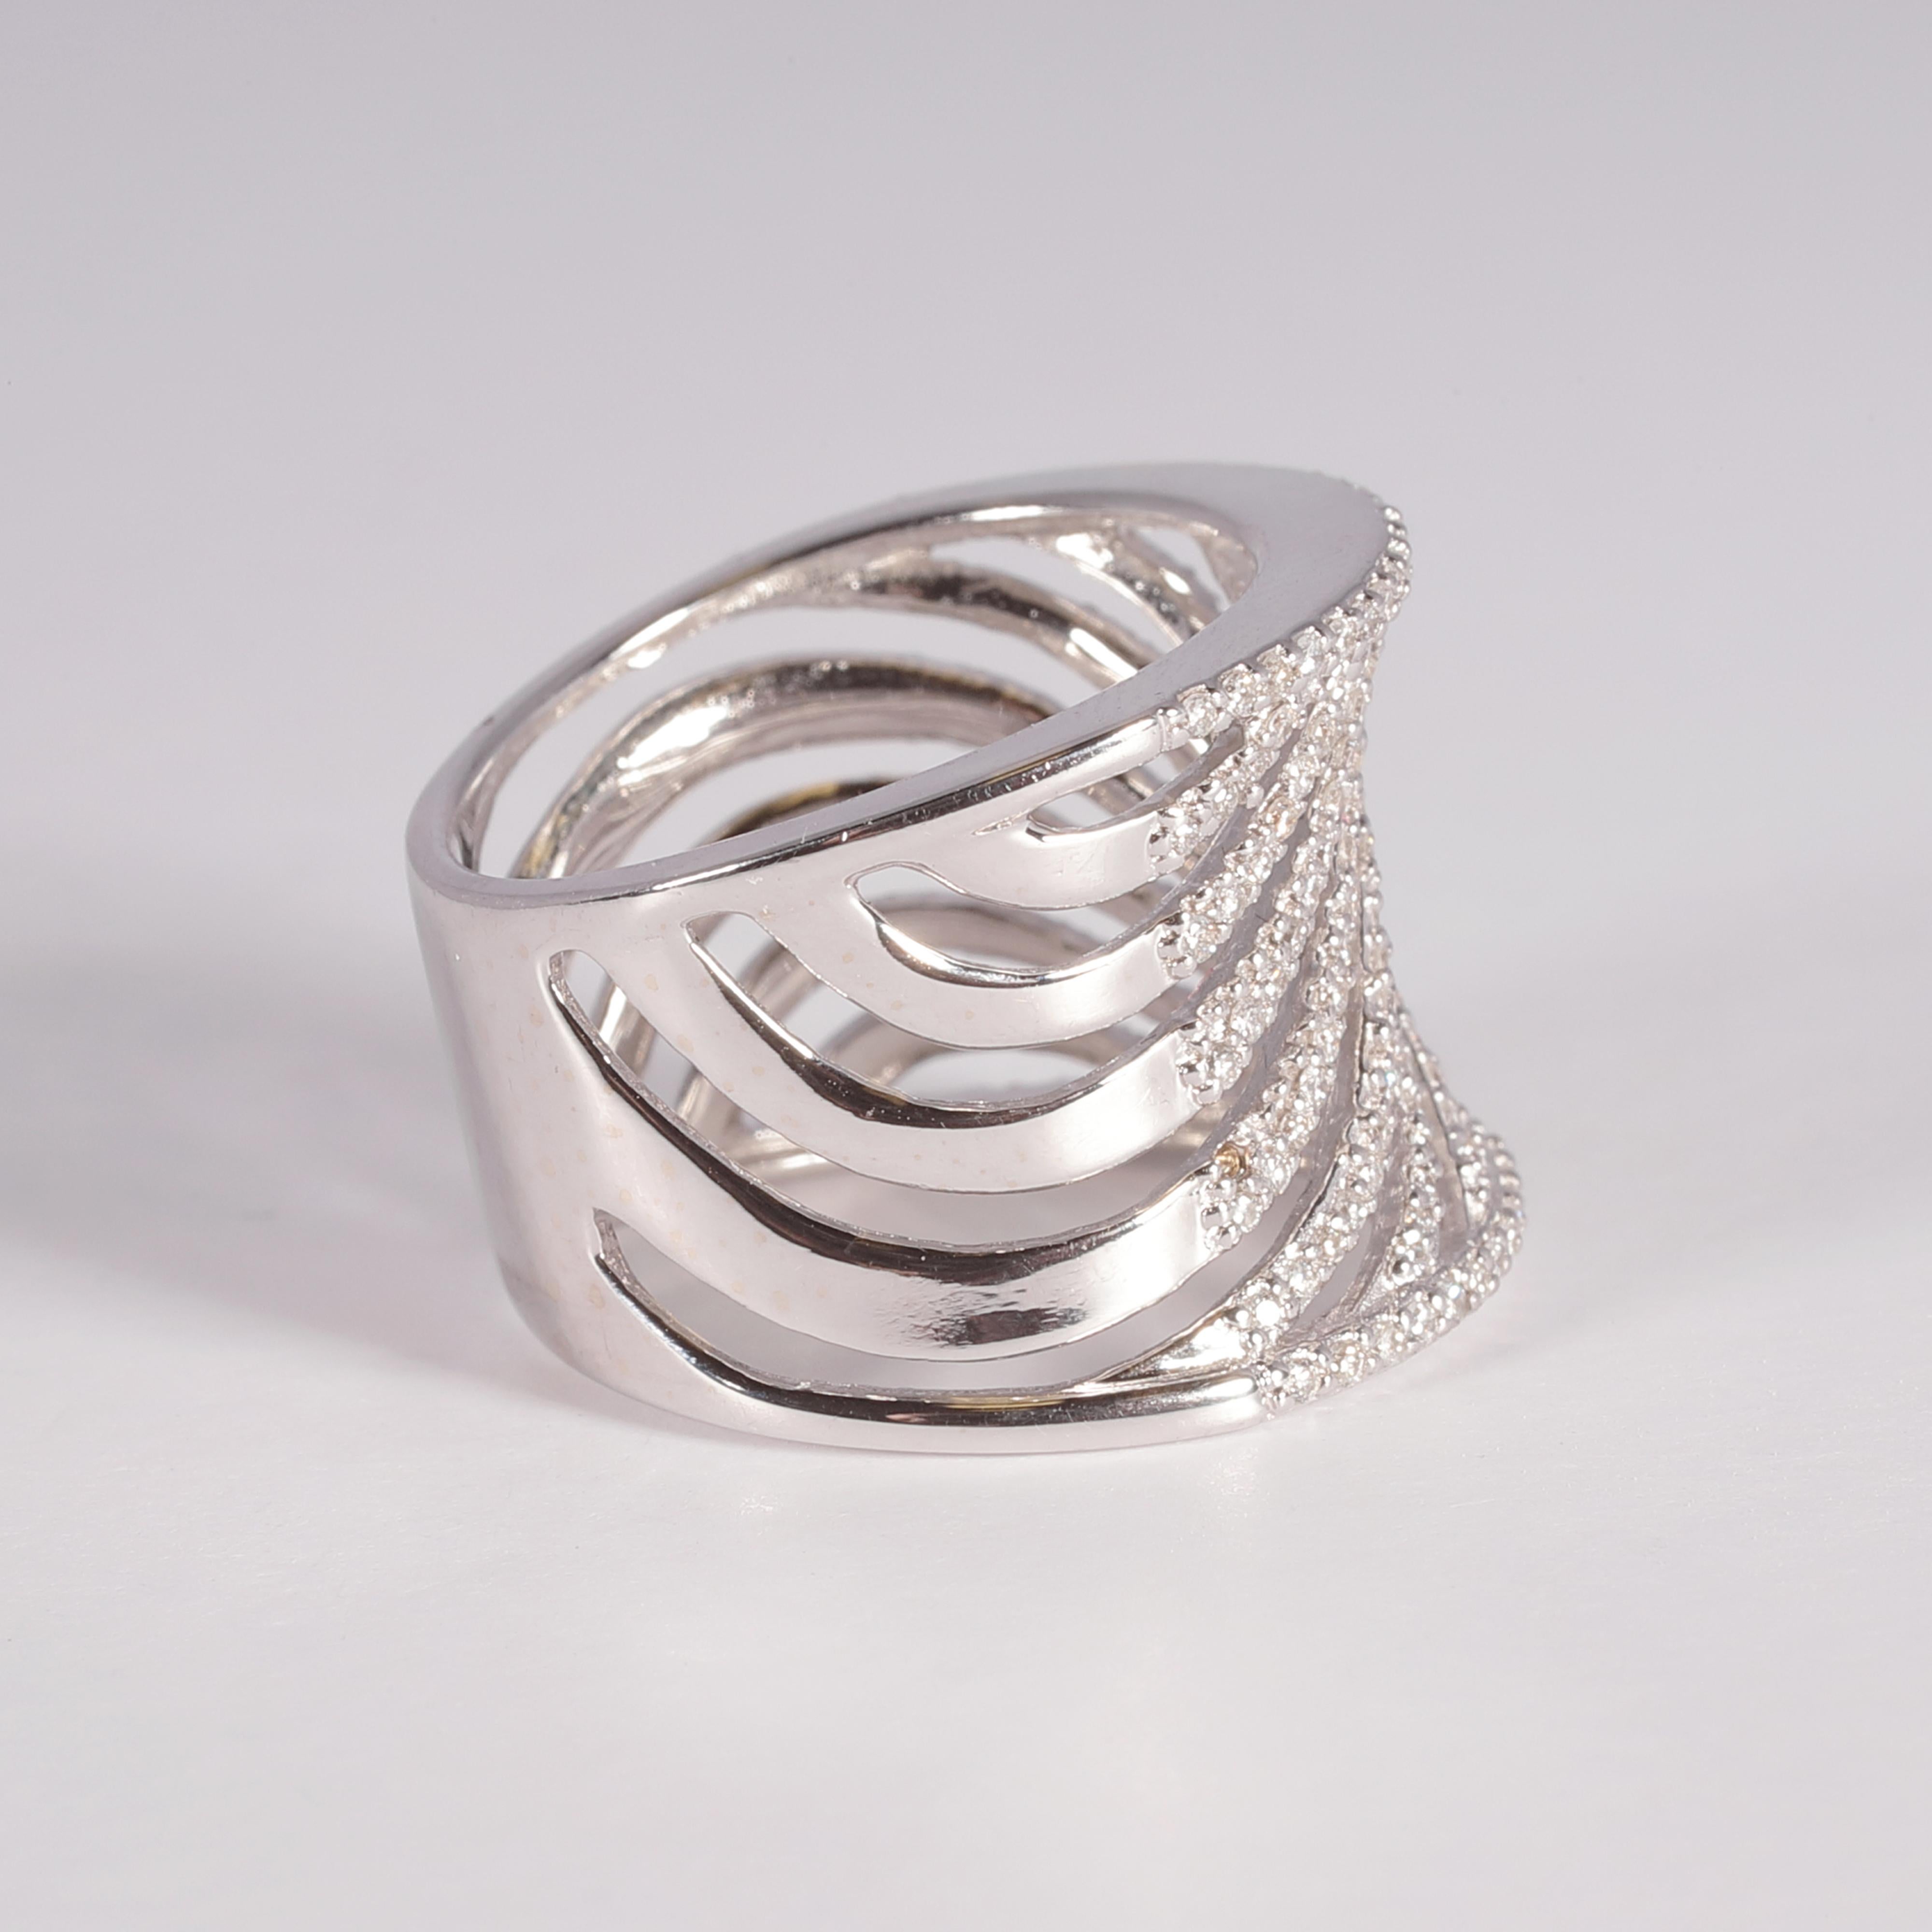 Women's or Men's White Gold 0.60 Carat Diamond Ring